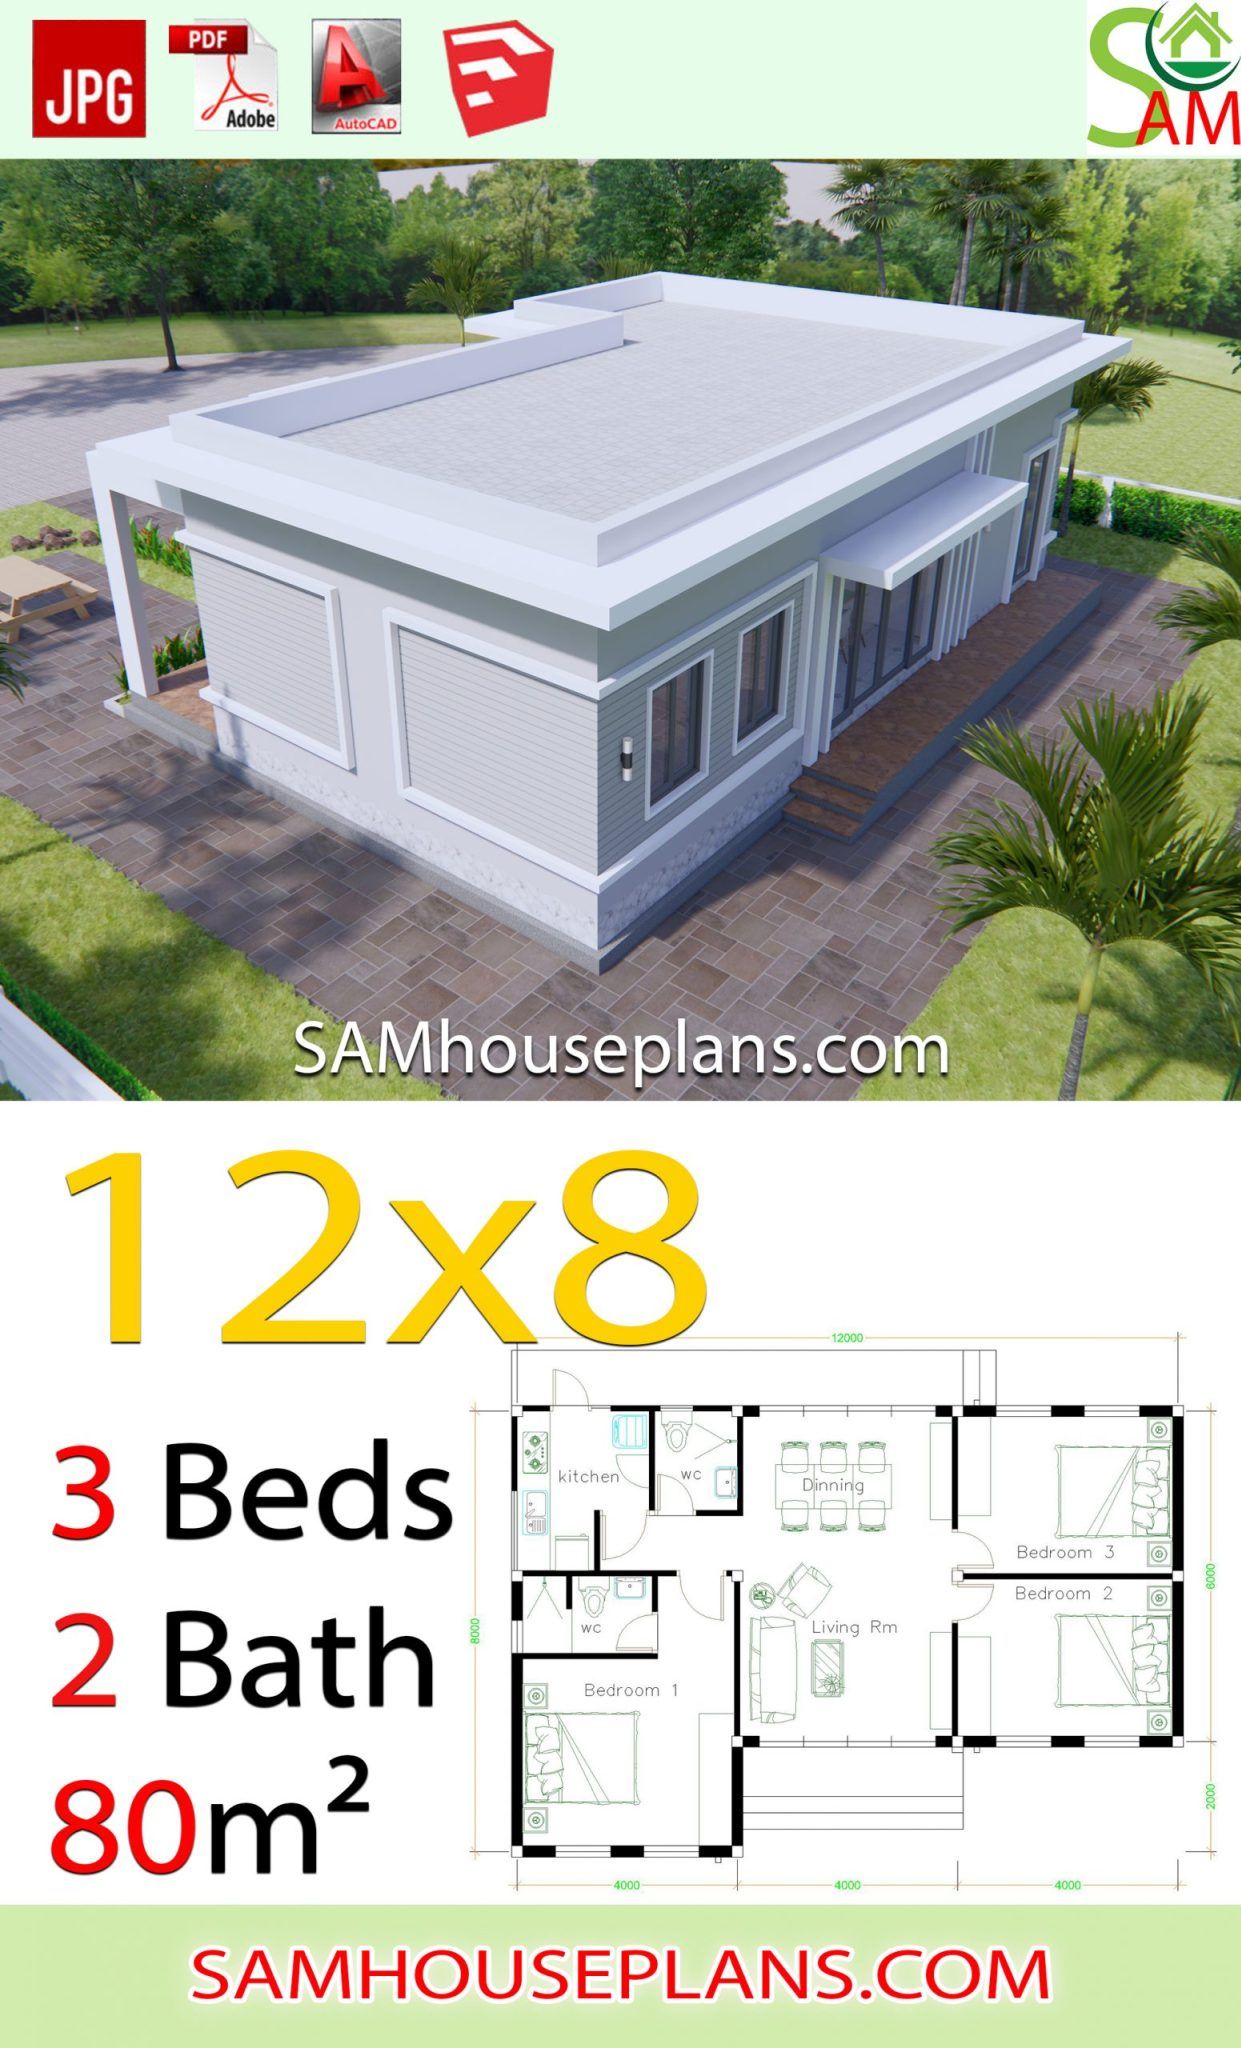 Salon De Jardin Occasion Luxe House Plans 12×8 with 3 Bedrooms Terrace Roof En 2020